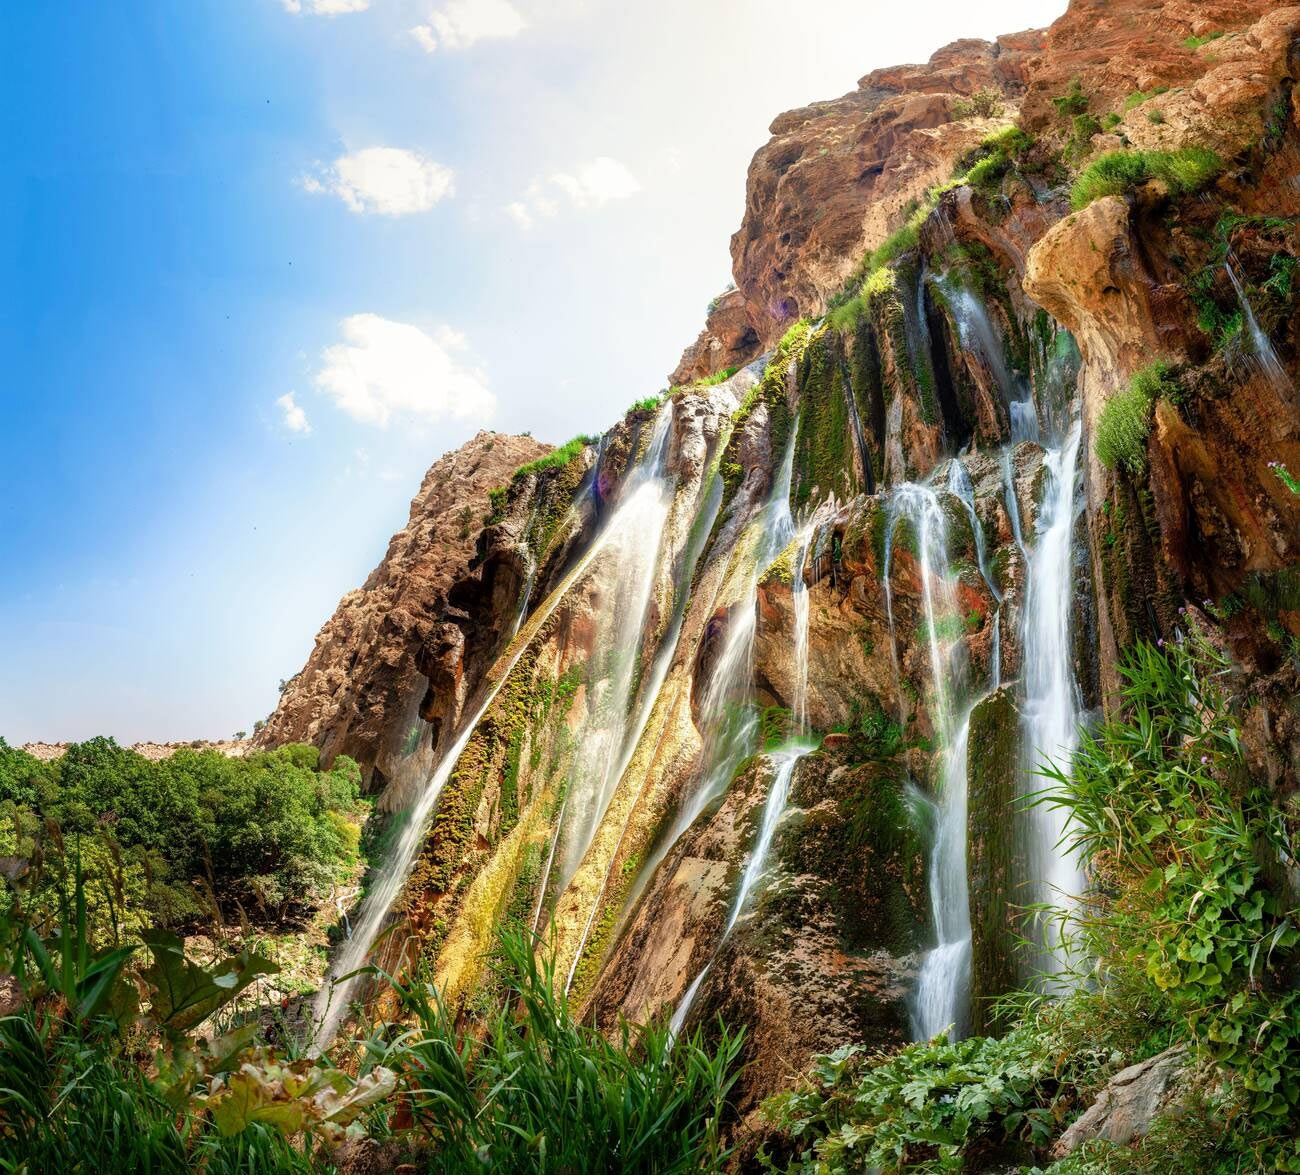 Margoon Waterfall as one of the Most Beautiful Waterfalls In Iran